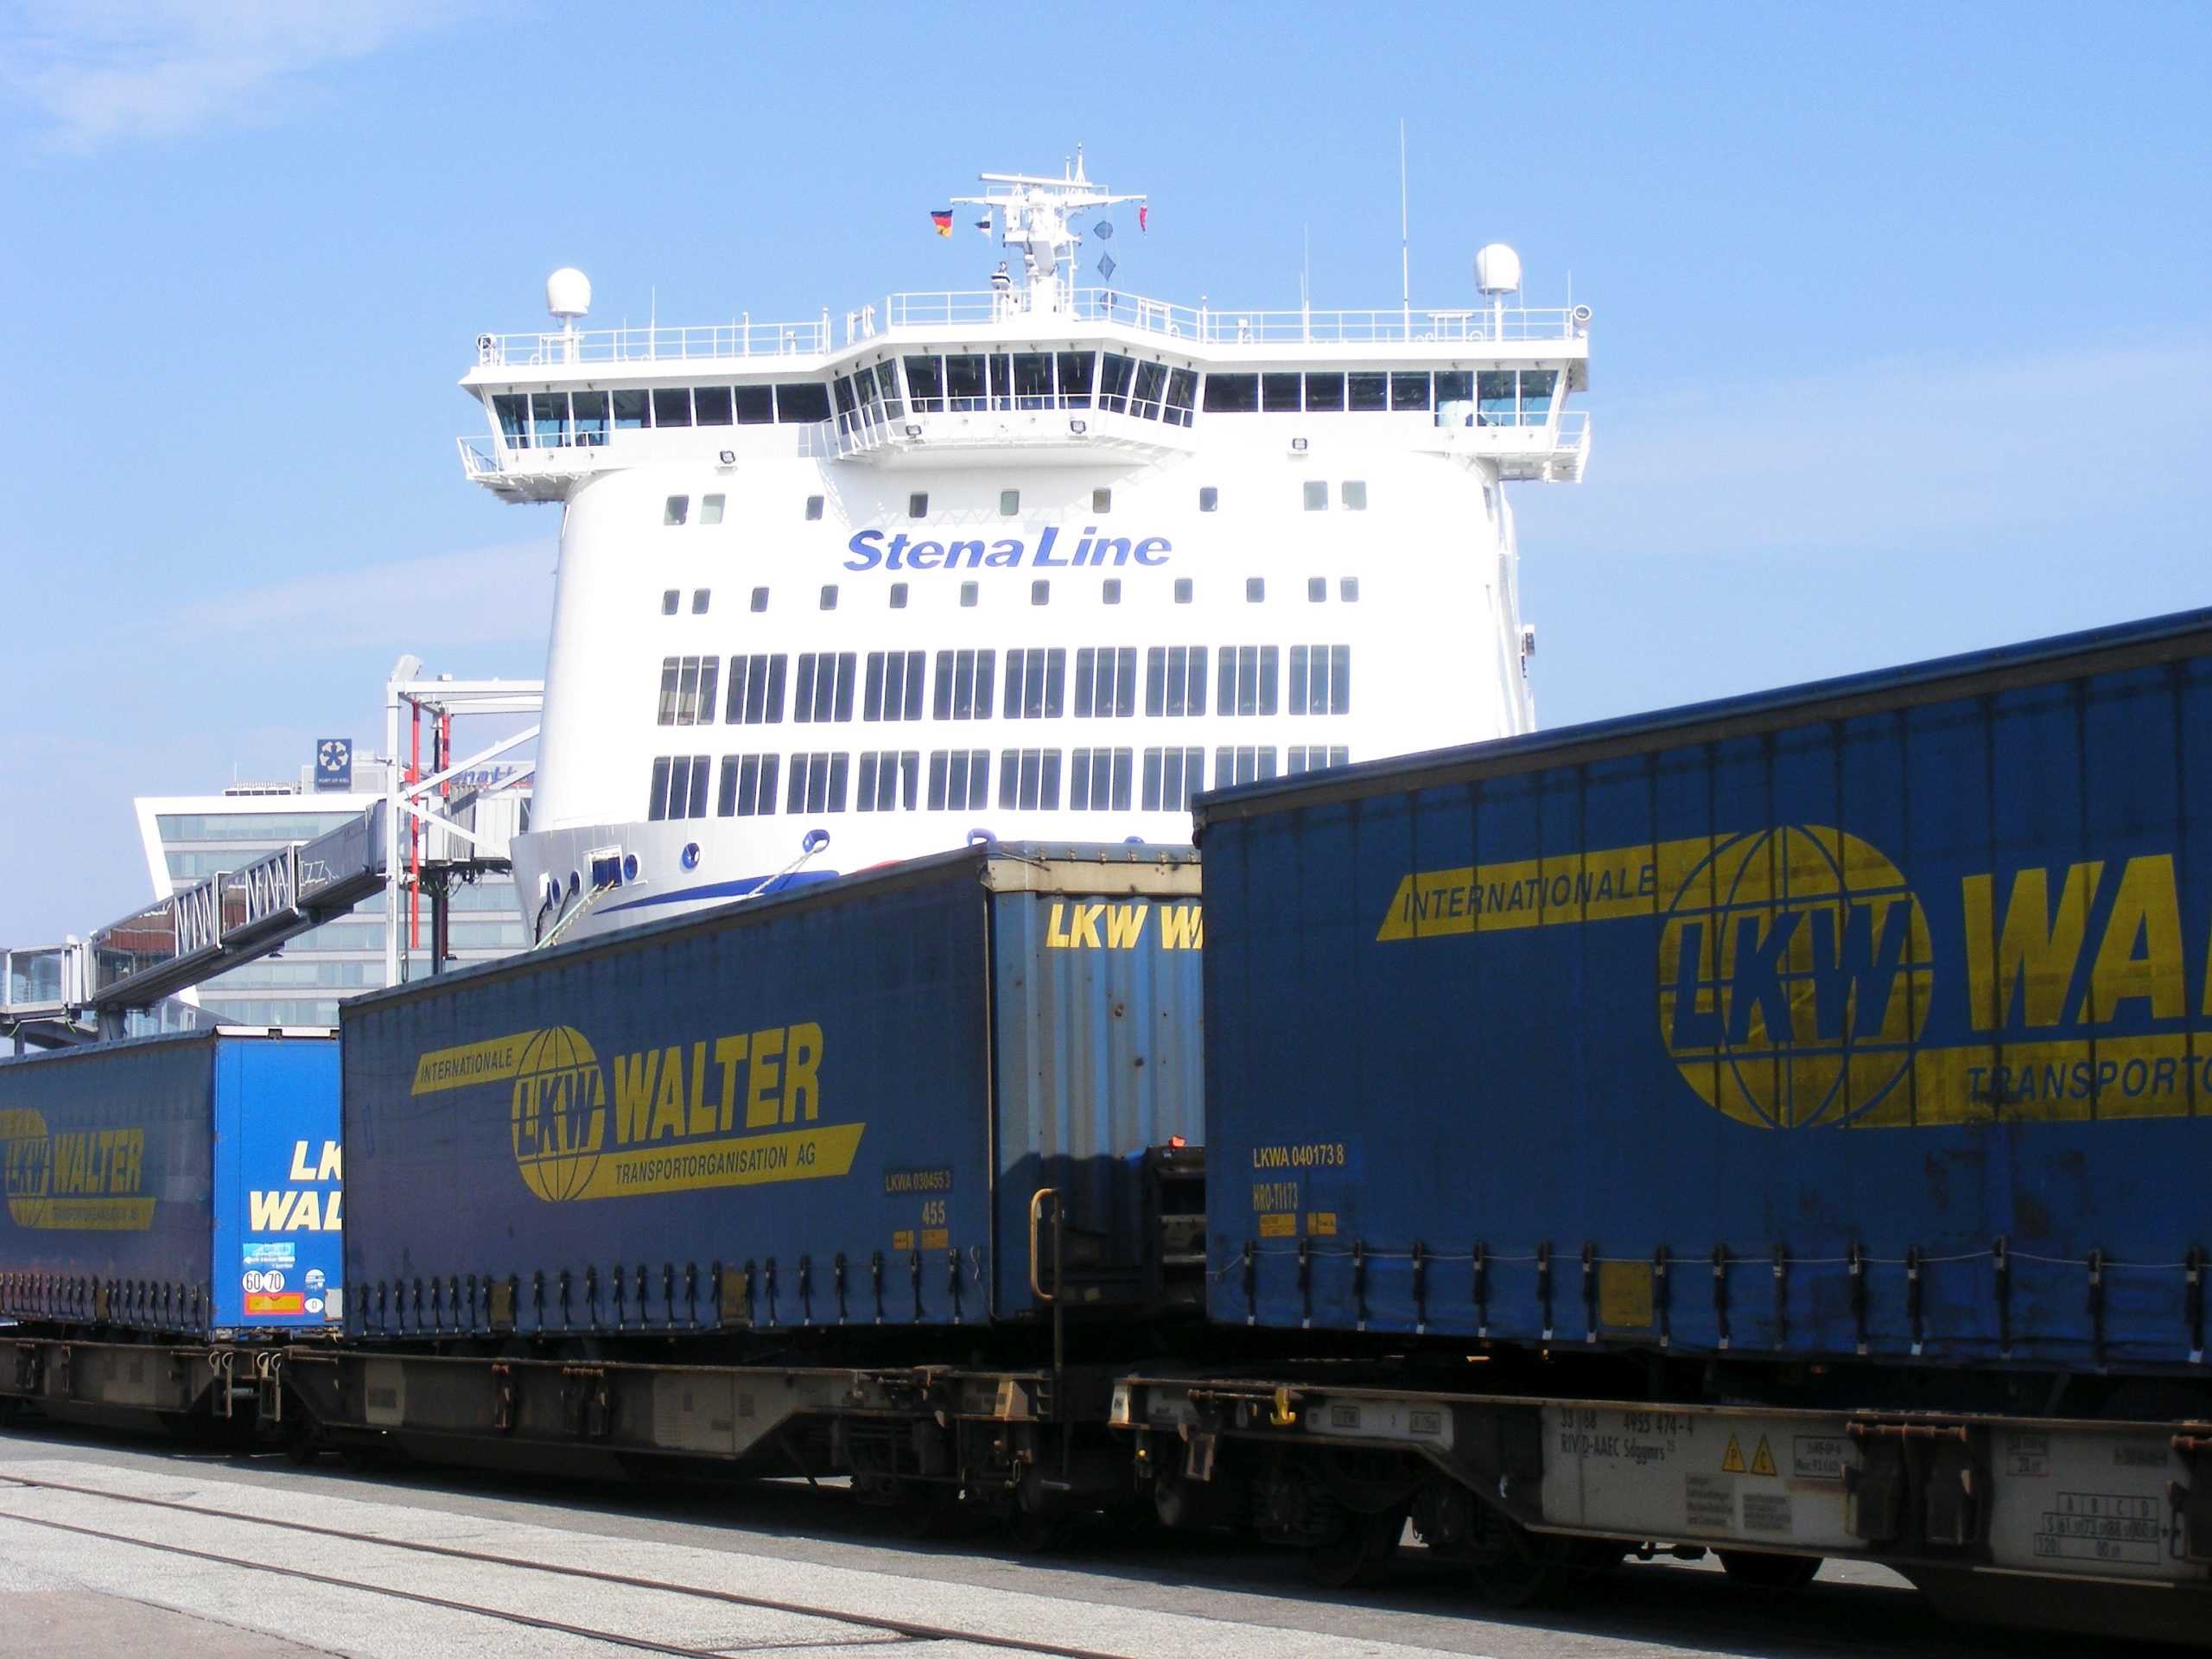 Sea, rail and road transport